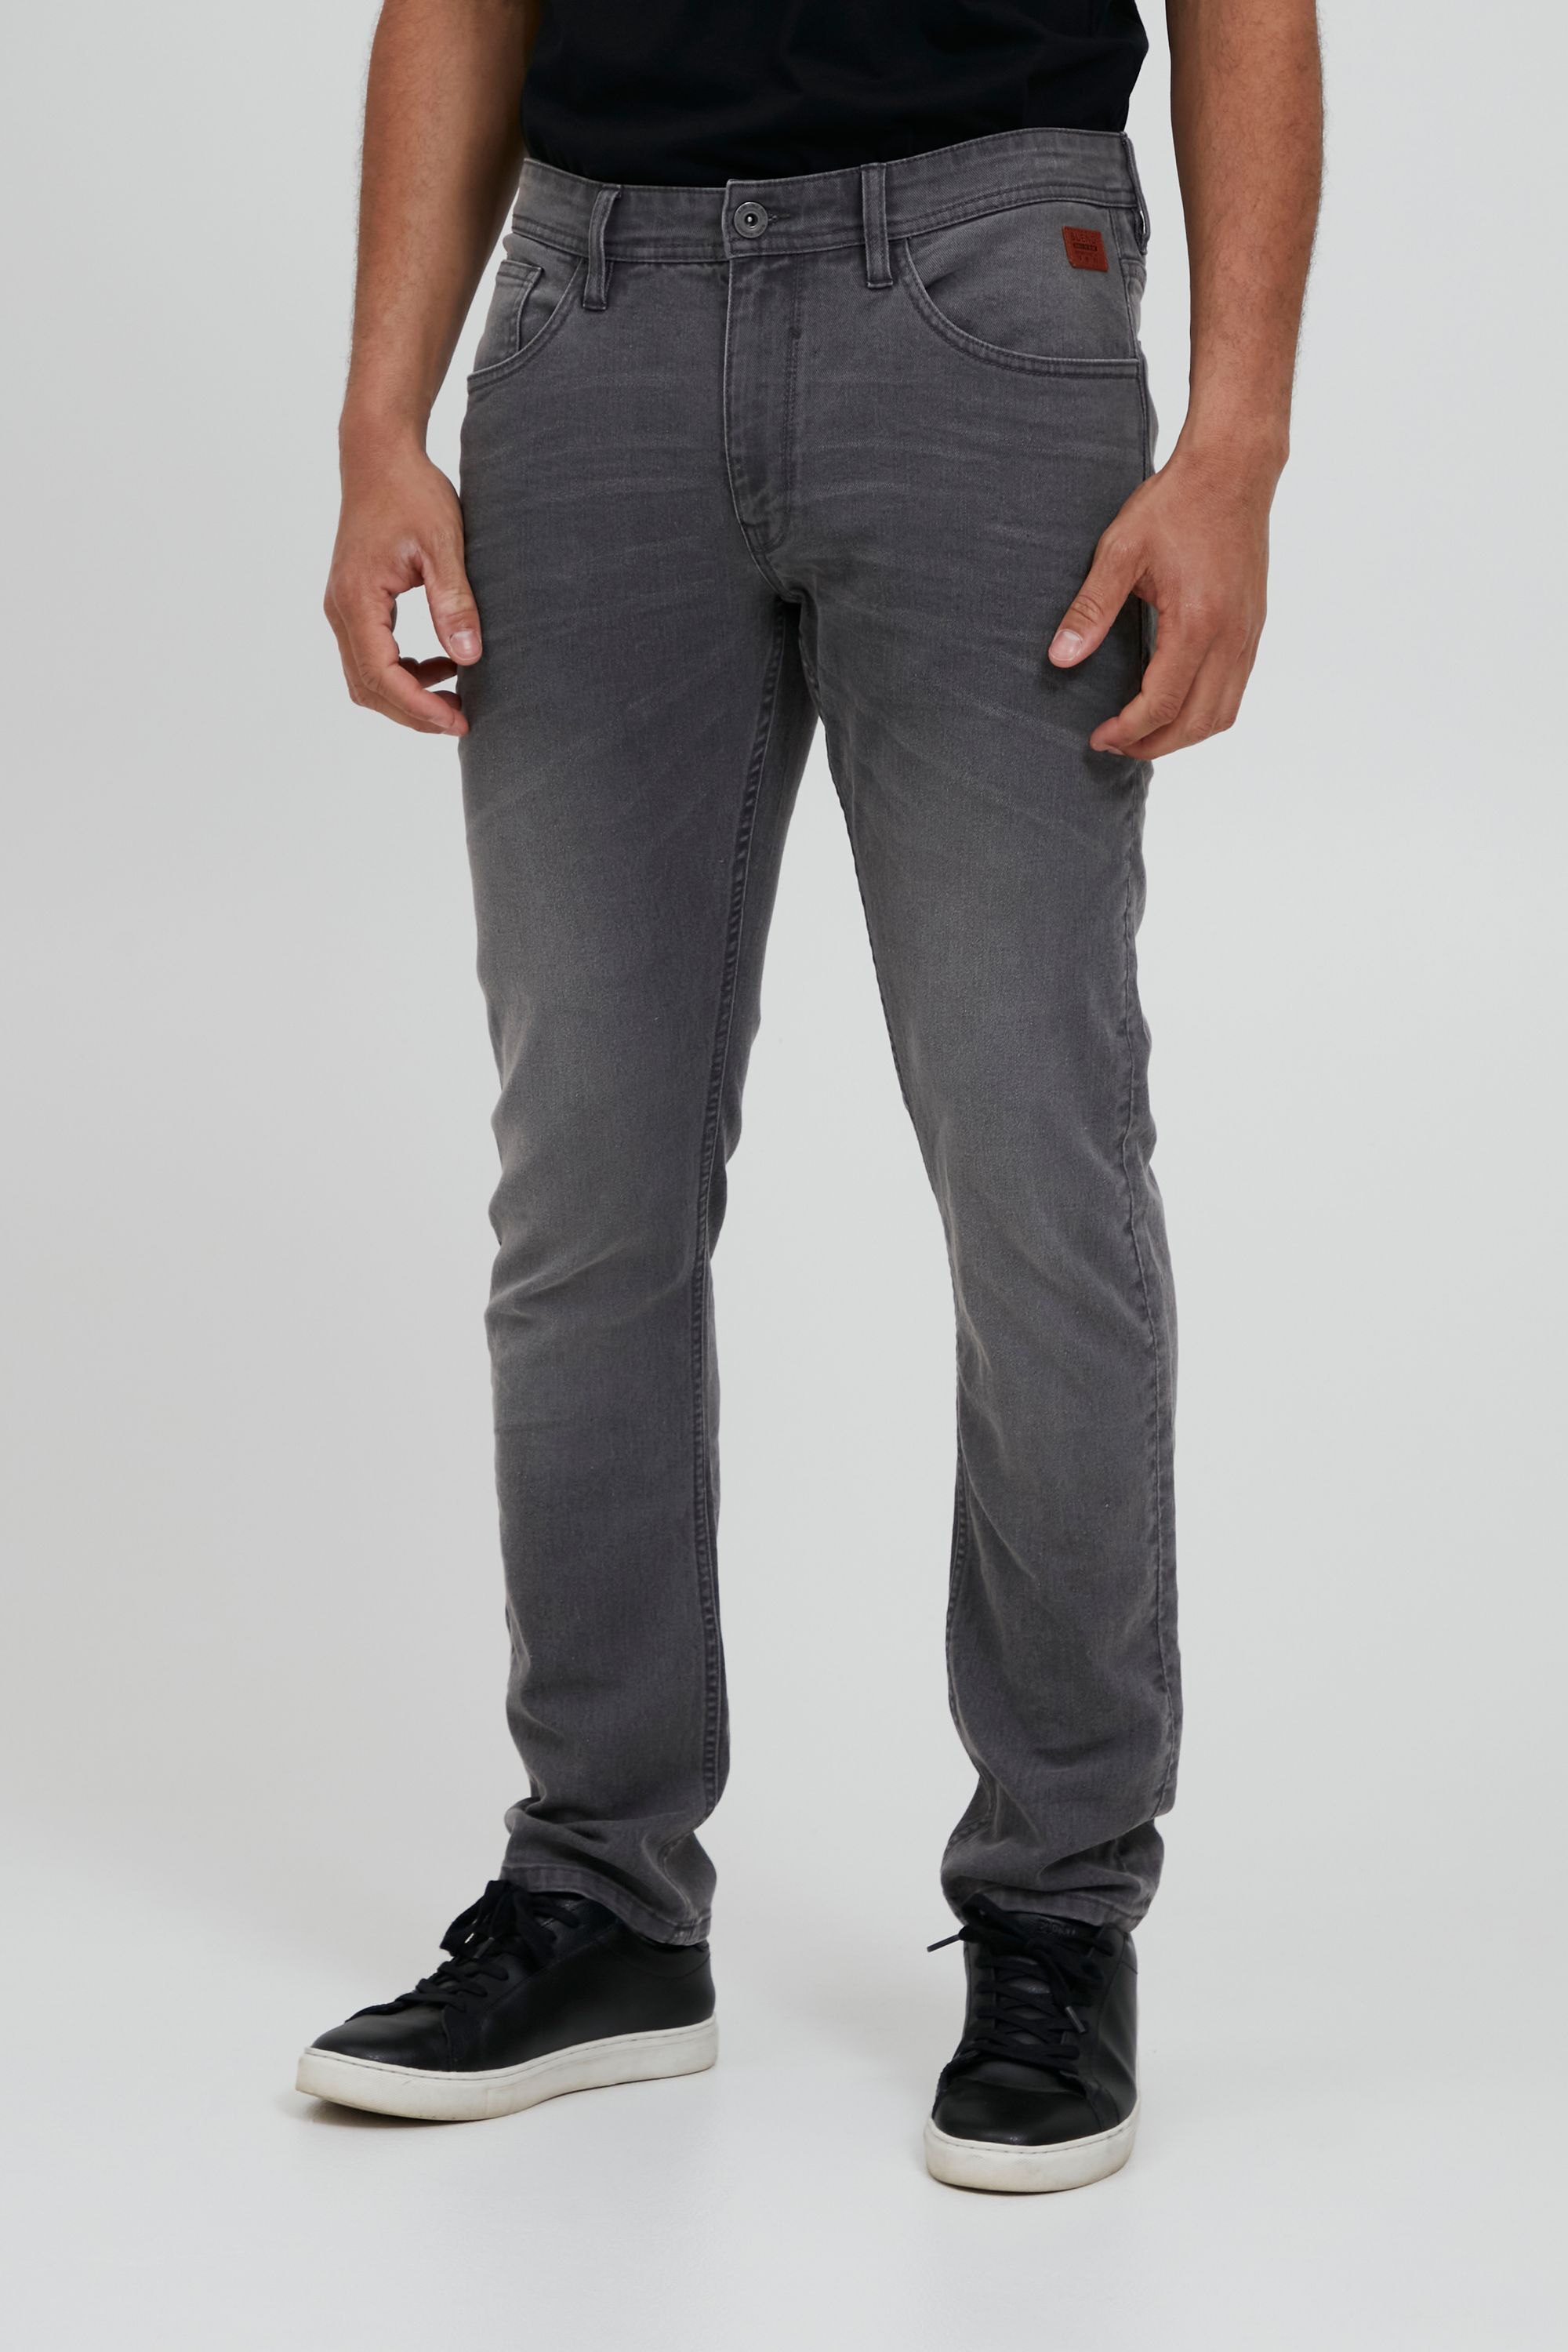 BLEND Taifun Herren Jeans Hose Denim Aus Stretch-Material Slim Fit, Größe:W33/34, Farbe:Denim Black (76204)